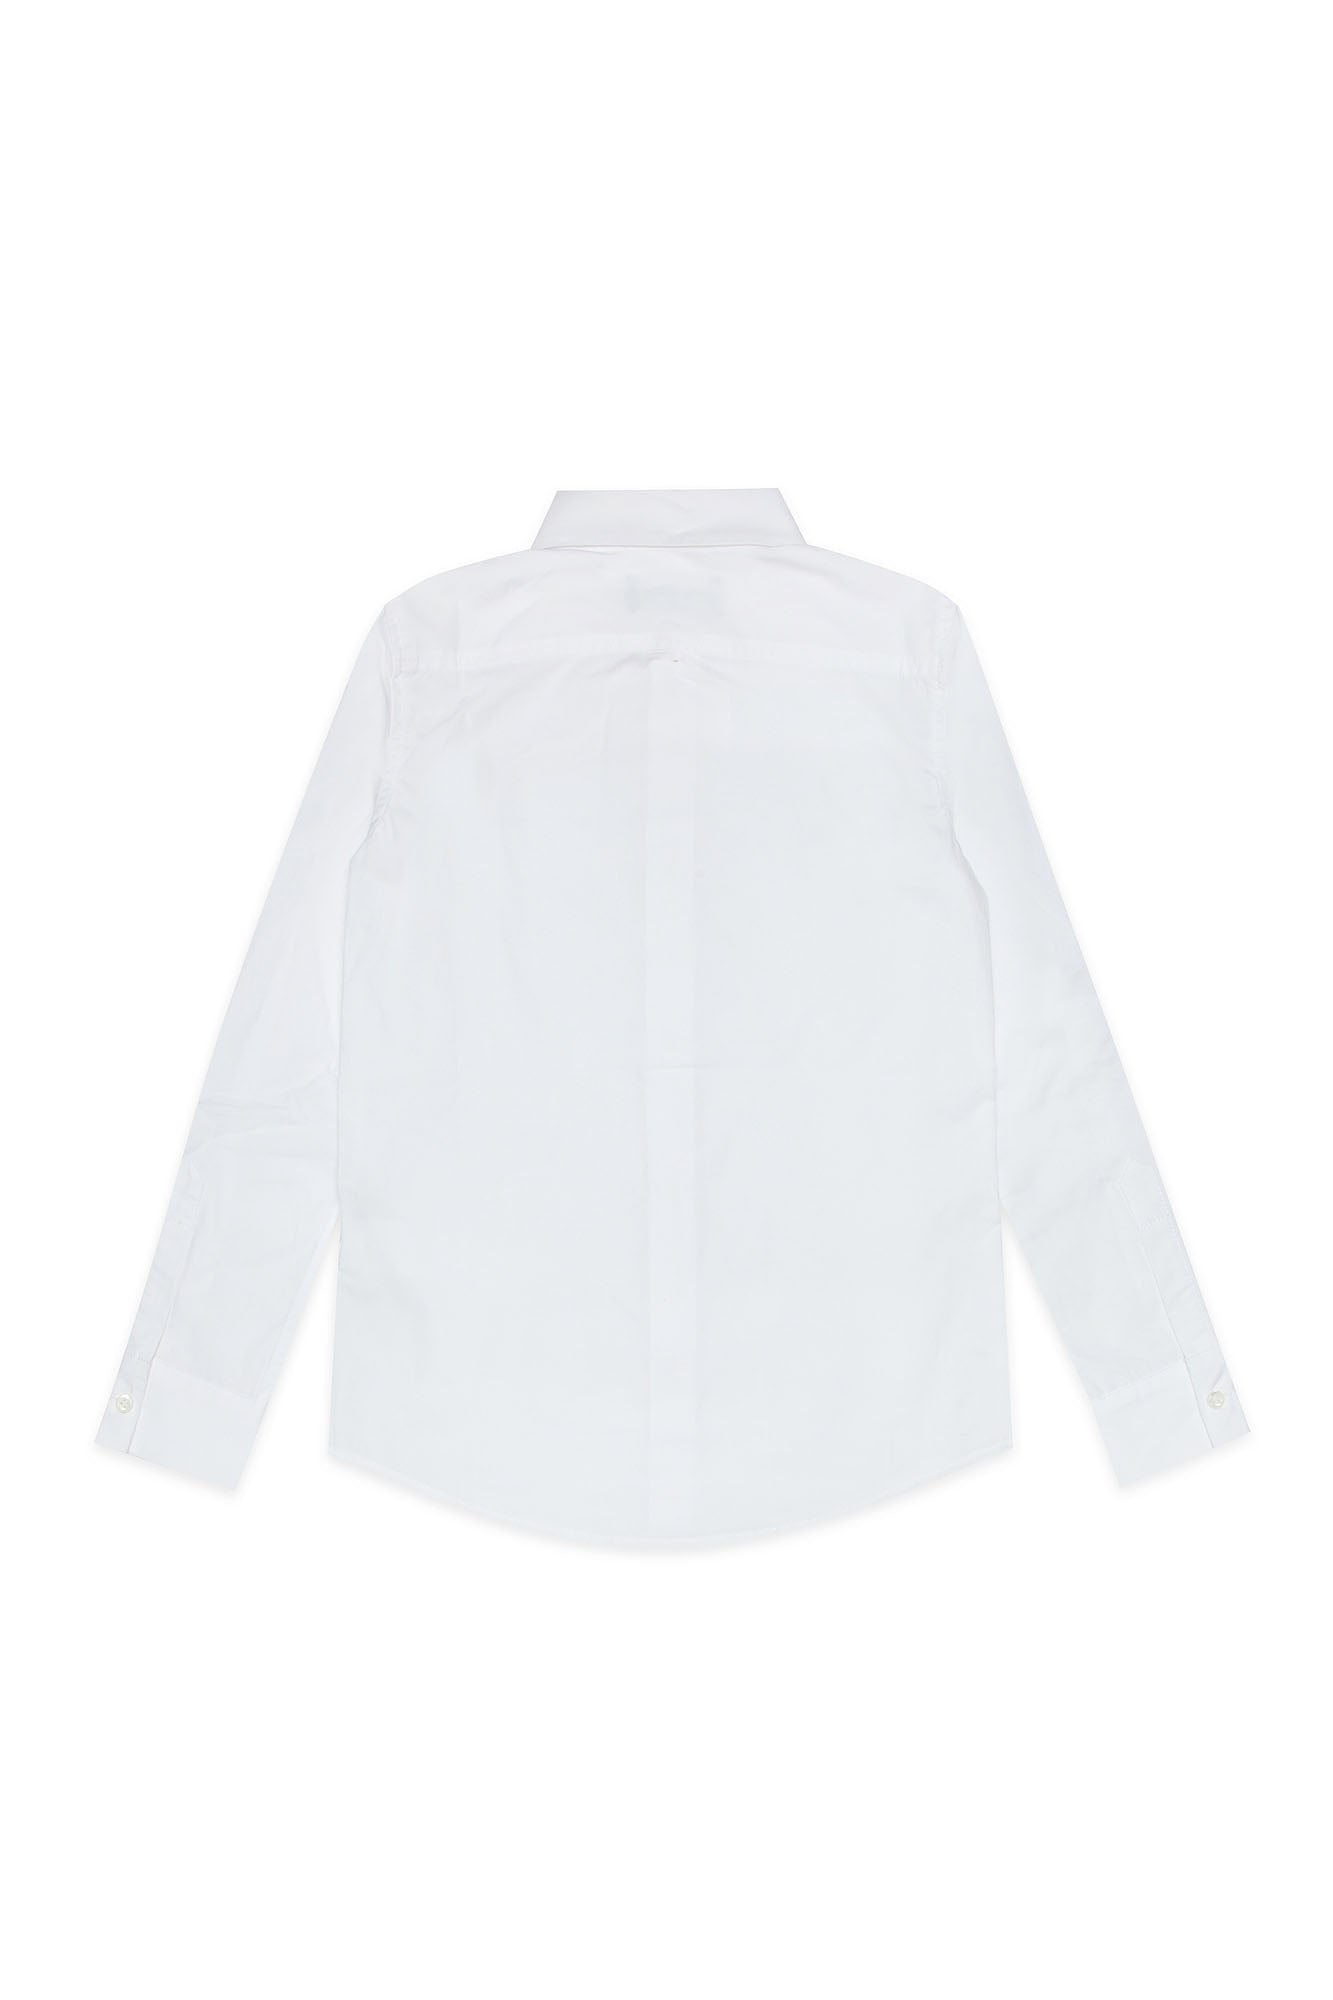 Dsquared2 Unisex Child Shirt DQ1553 D007D White